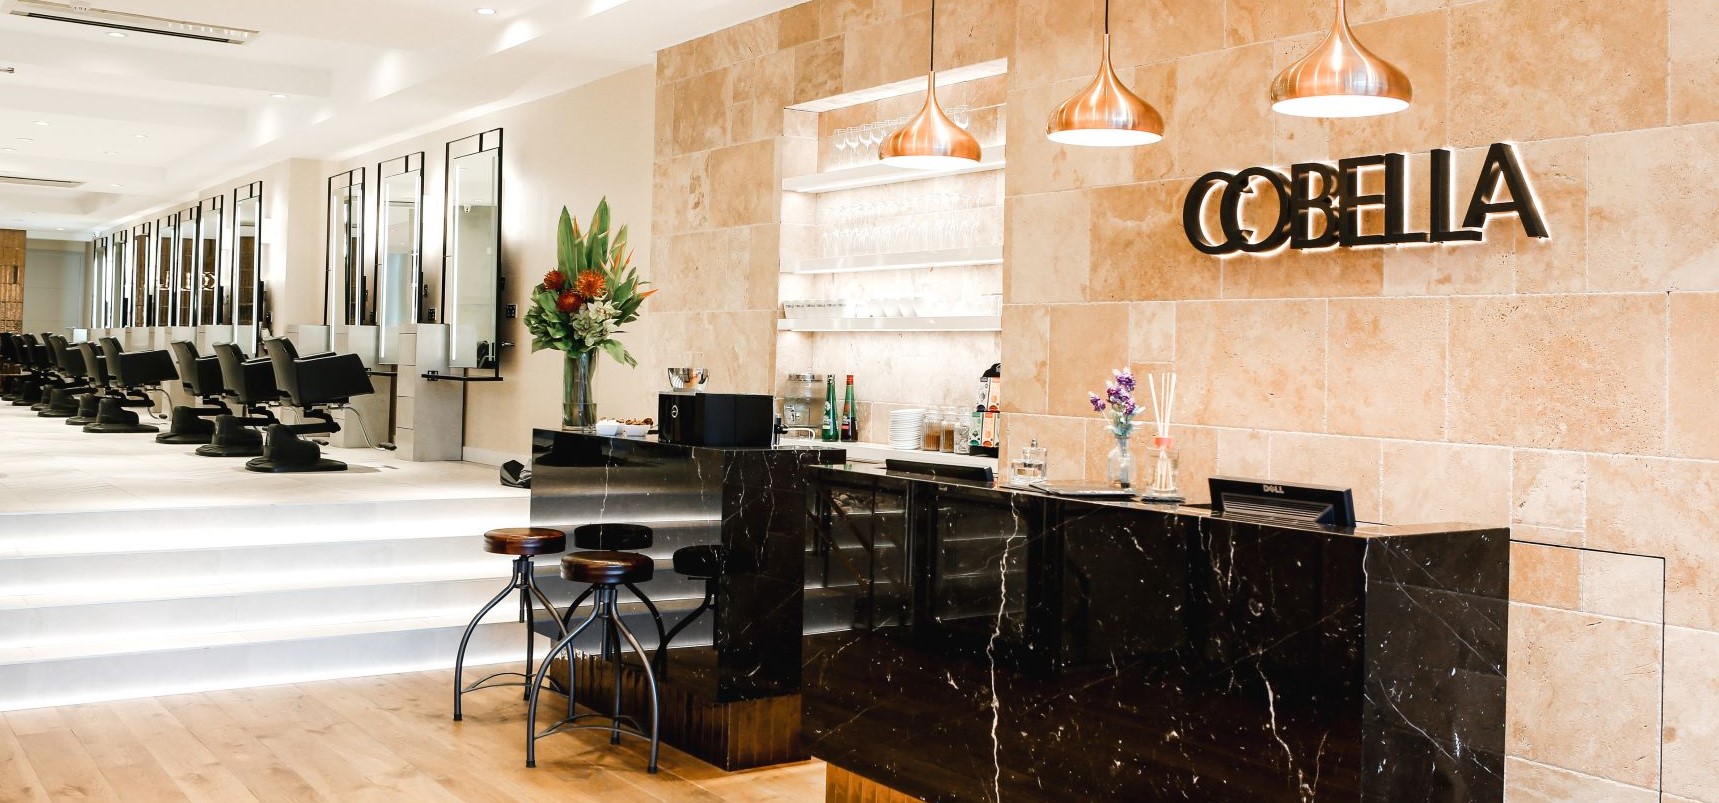 Cobella - Hair and Beauty Salon In London